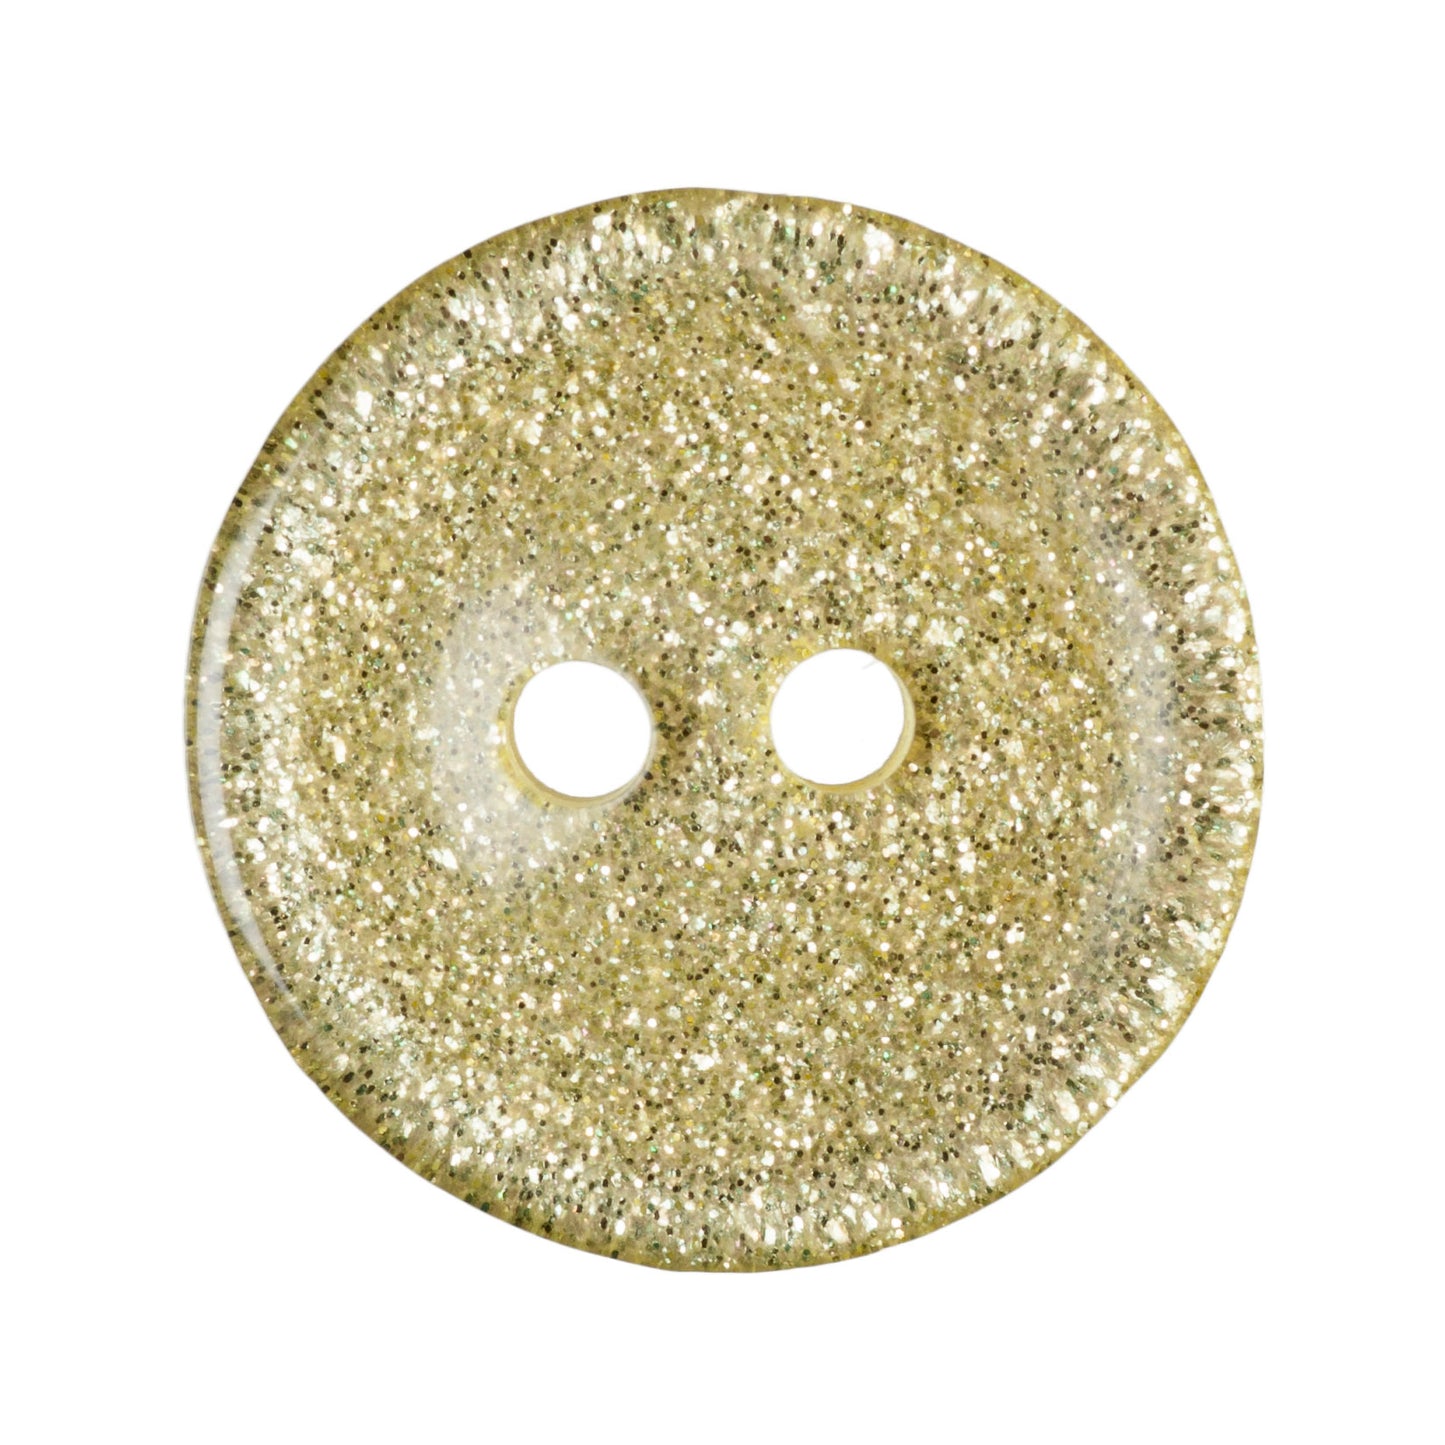 2 Hole Round Glitter Button - 15mm - Light Yellow [LD10.5]